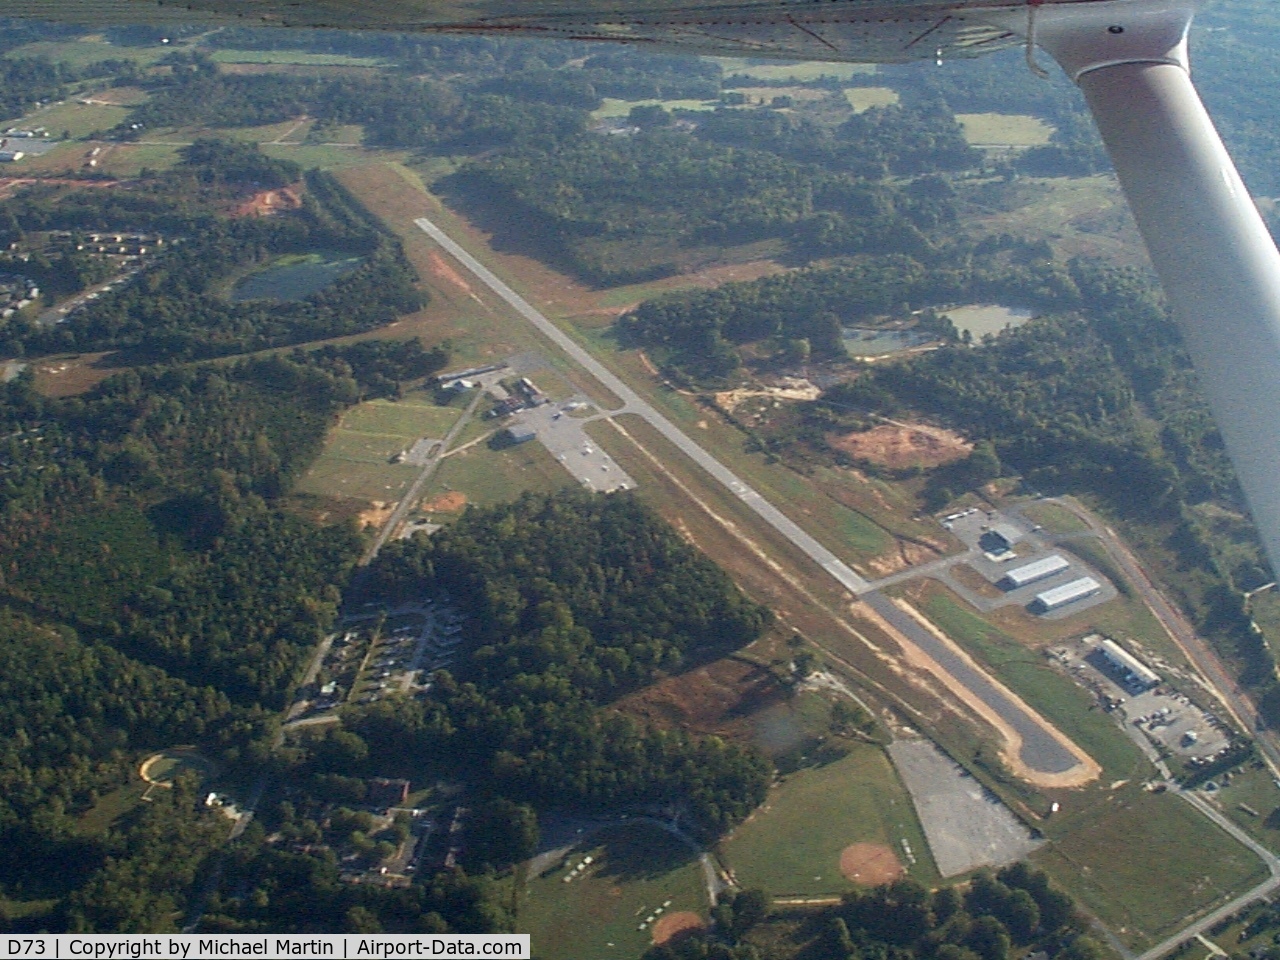 Monroe-walton County Airport (D73) - Monroe-Walton County Airport